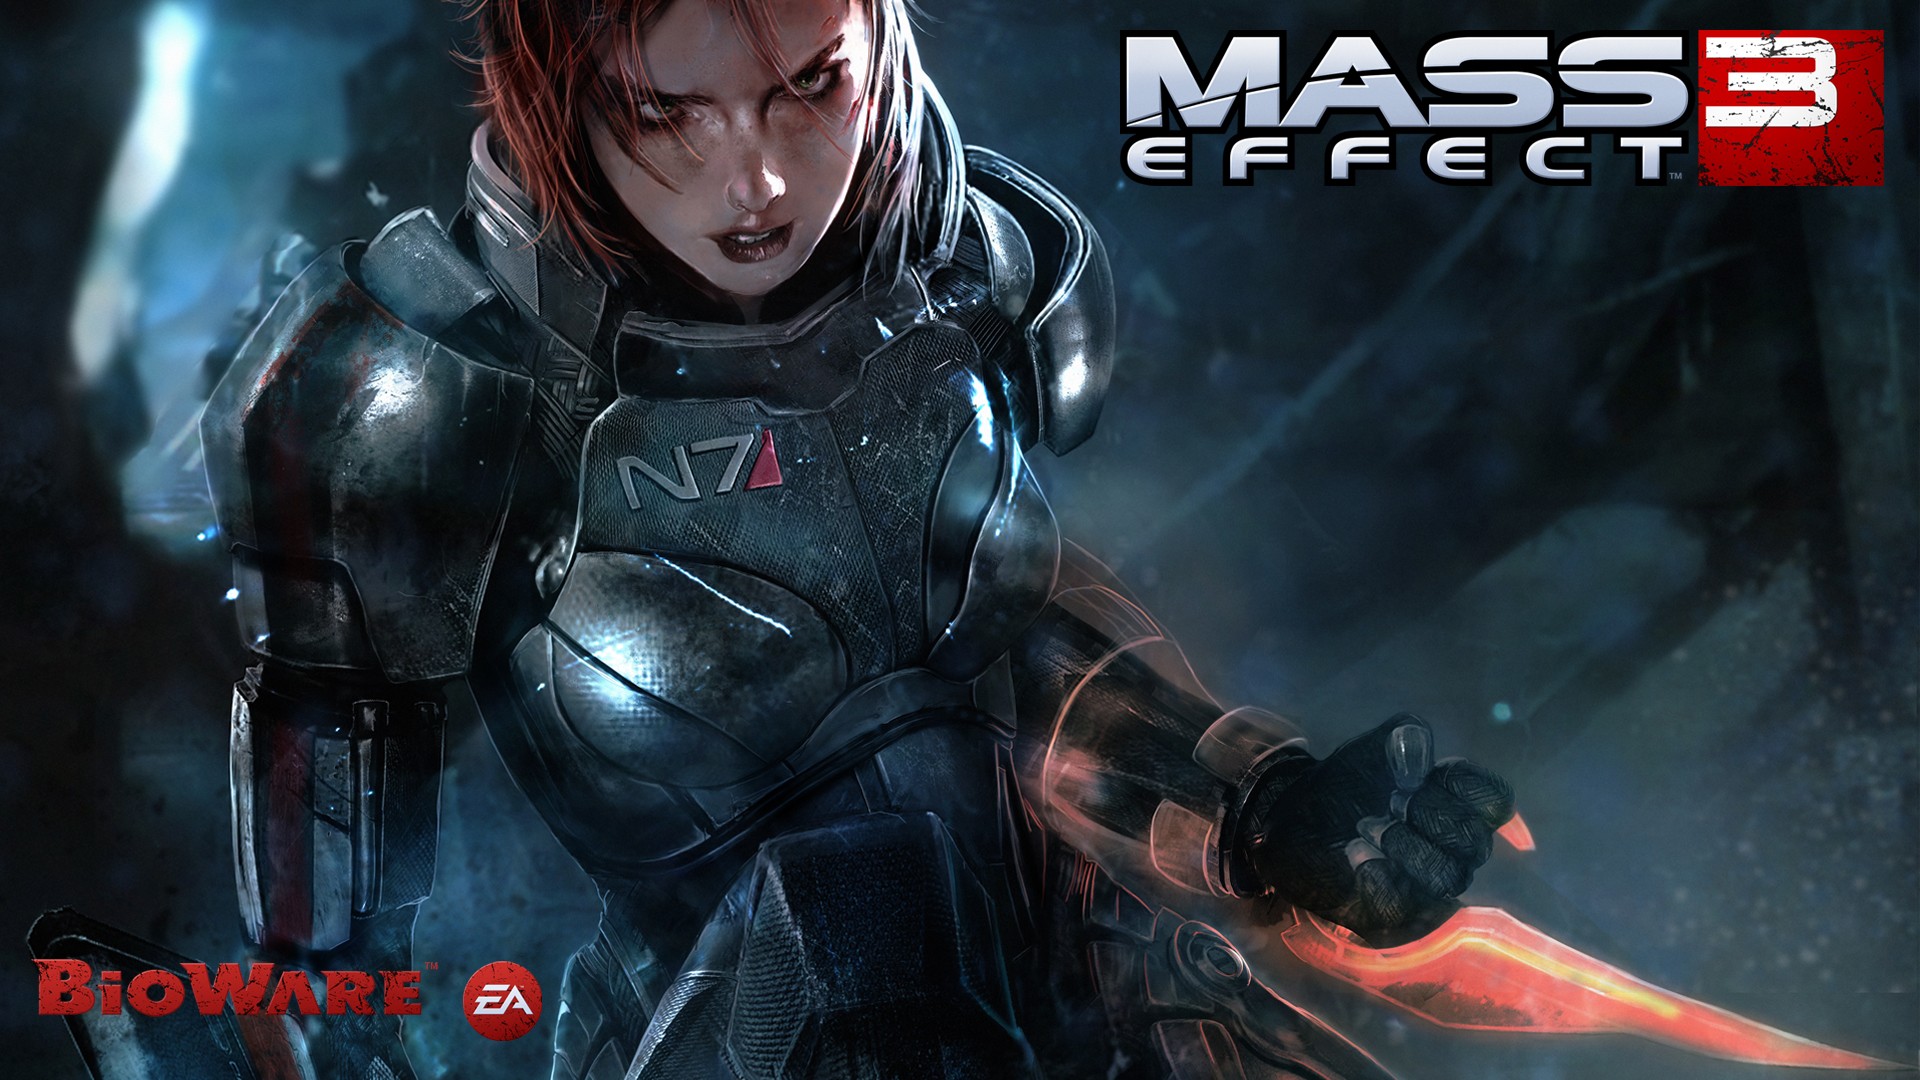 N7 Mass Effect HD Image Games